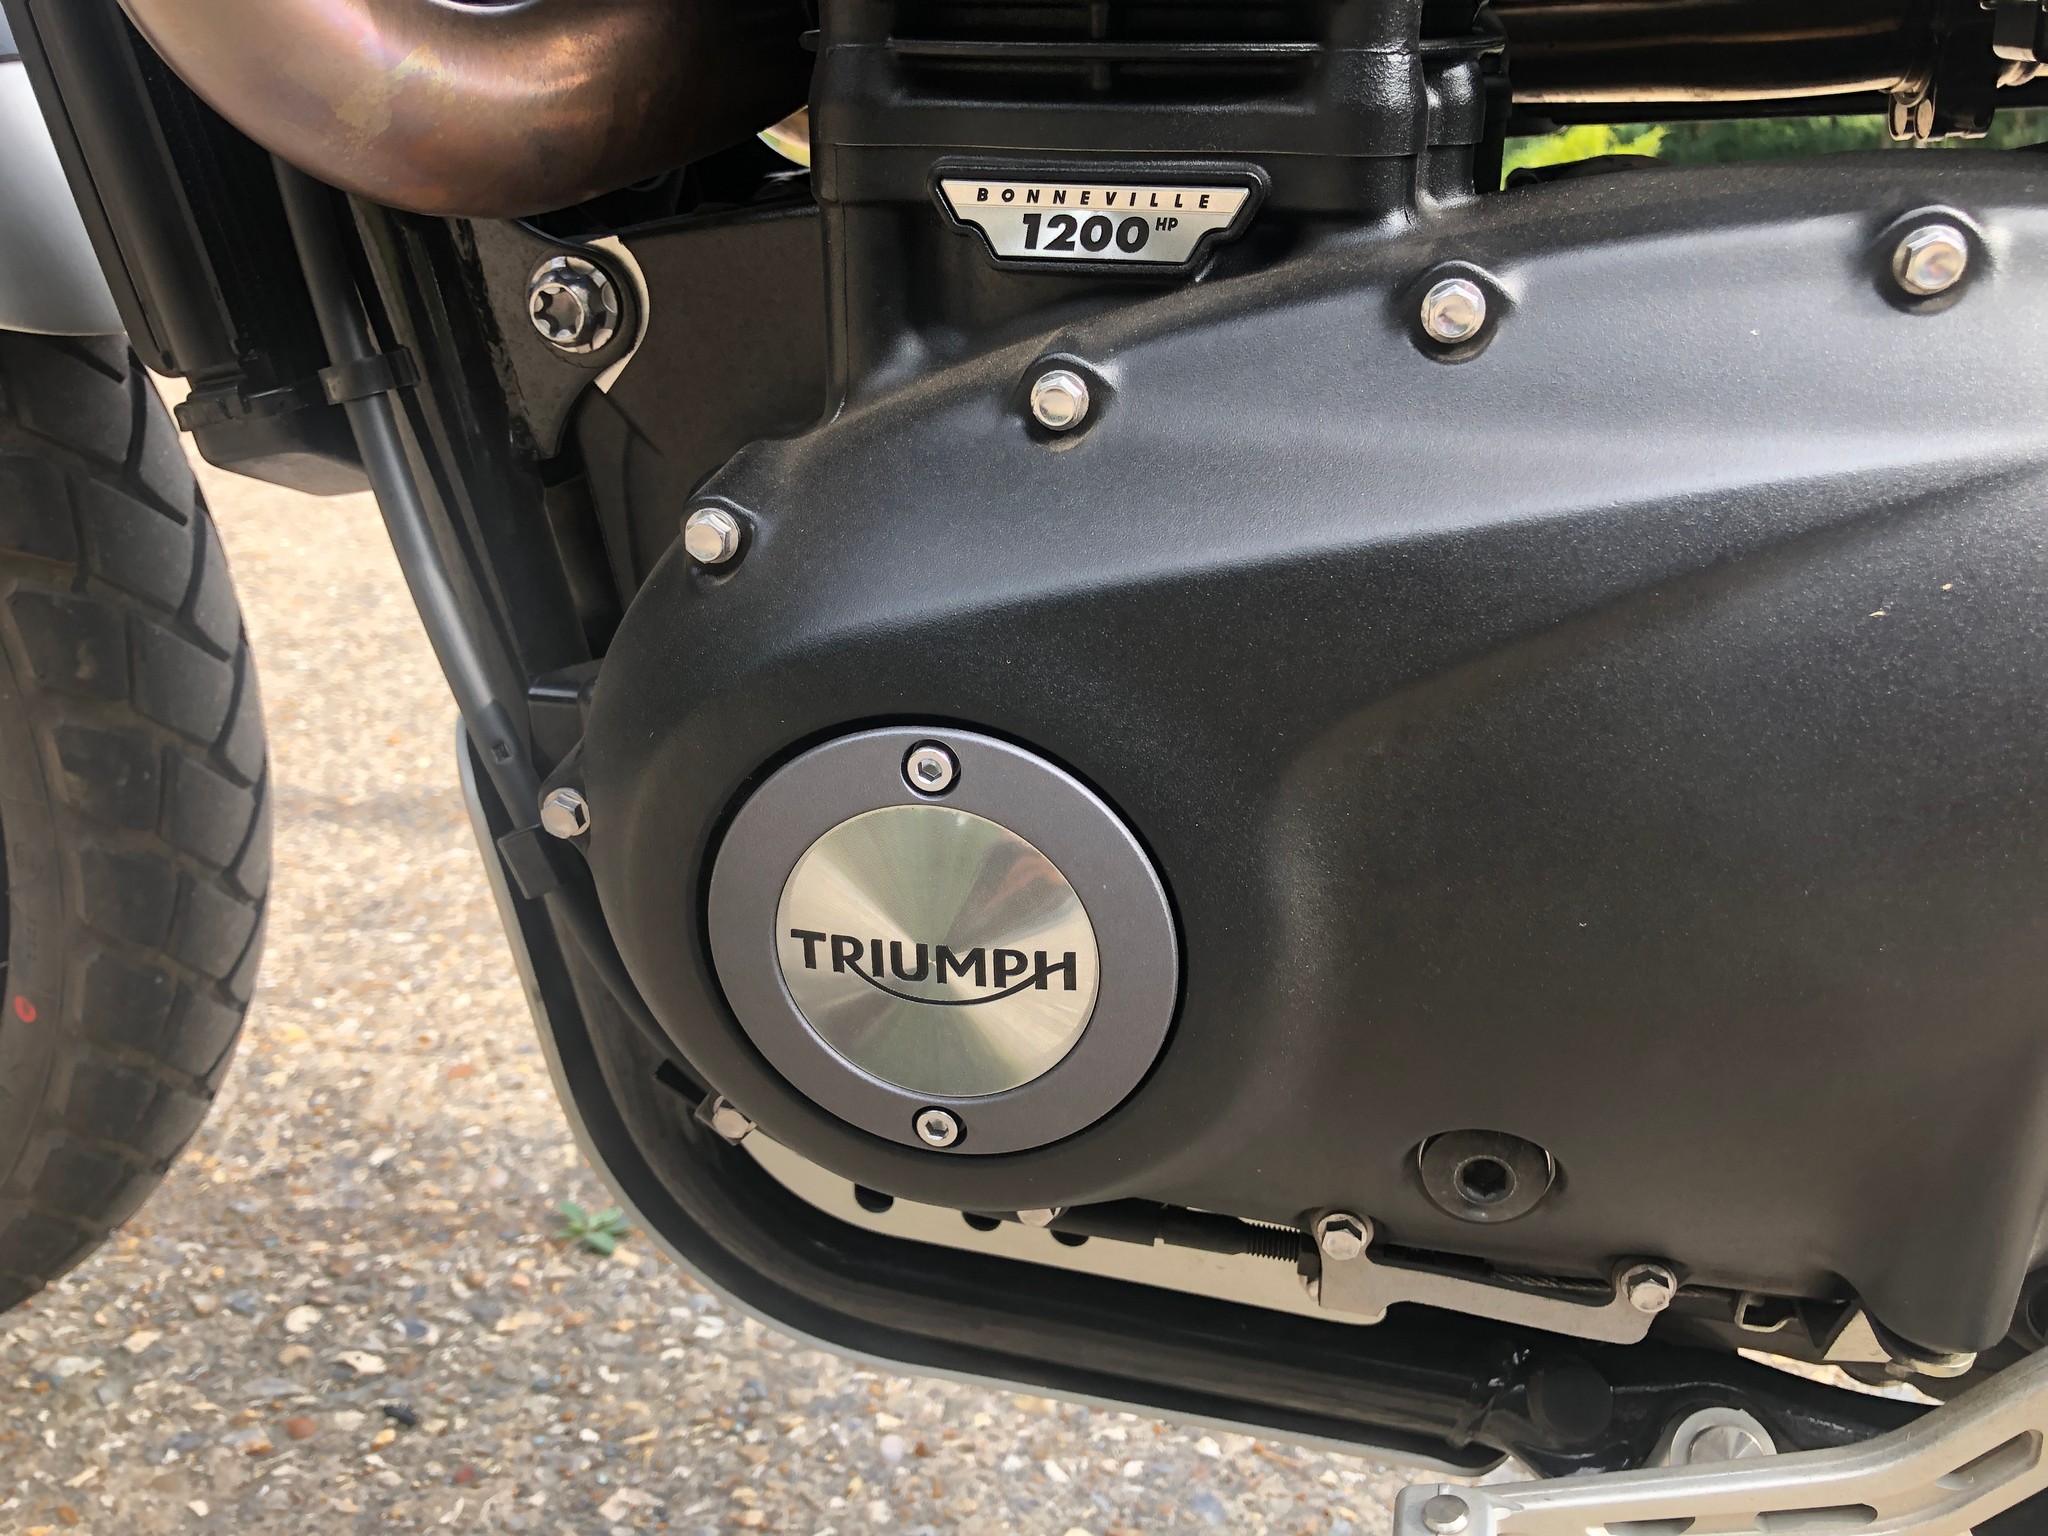 Closeup of Triumph logo